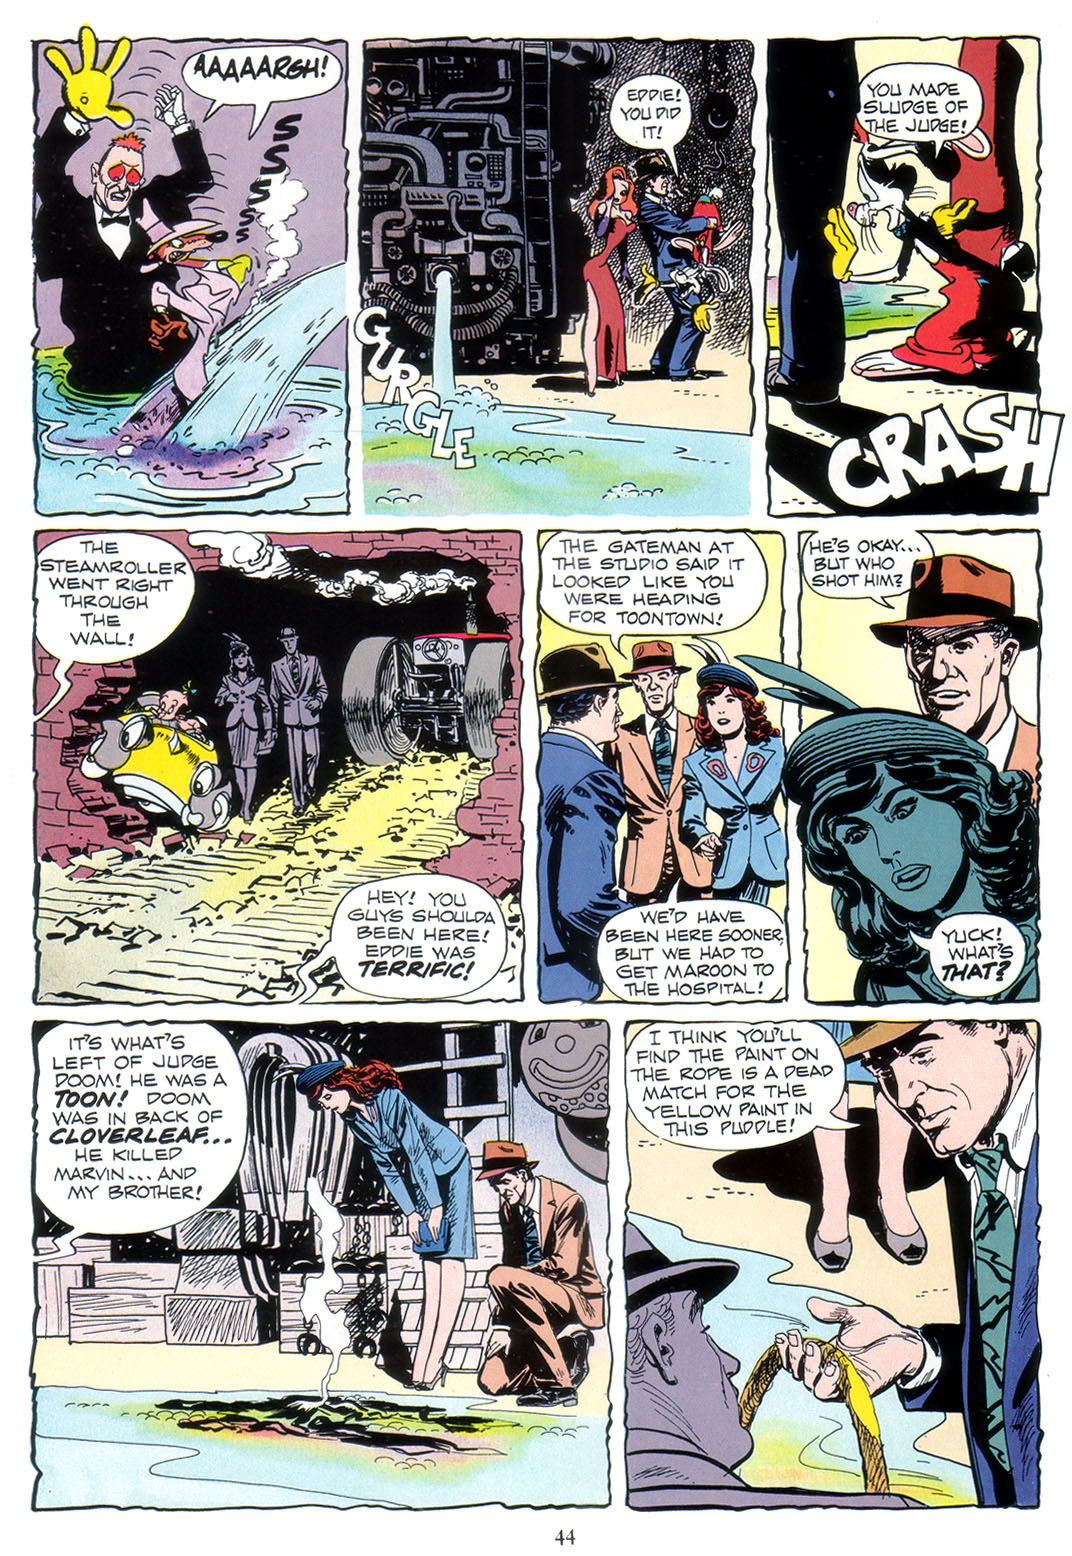 Marvel Graphic Novel issue 41 - Who Framed Roger Rabbit - Page 46